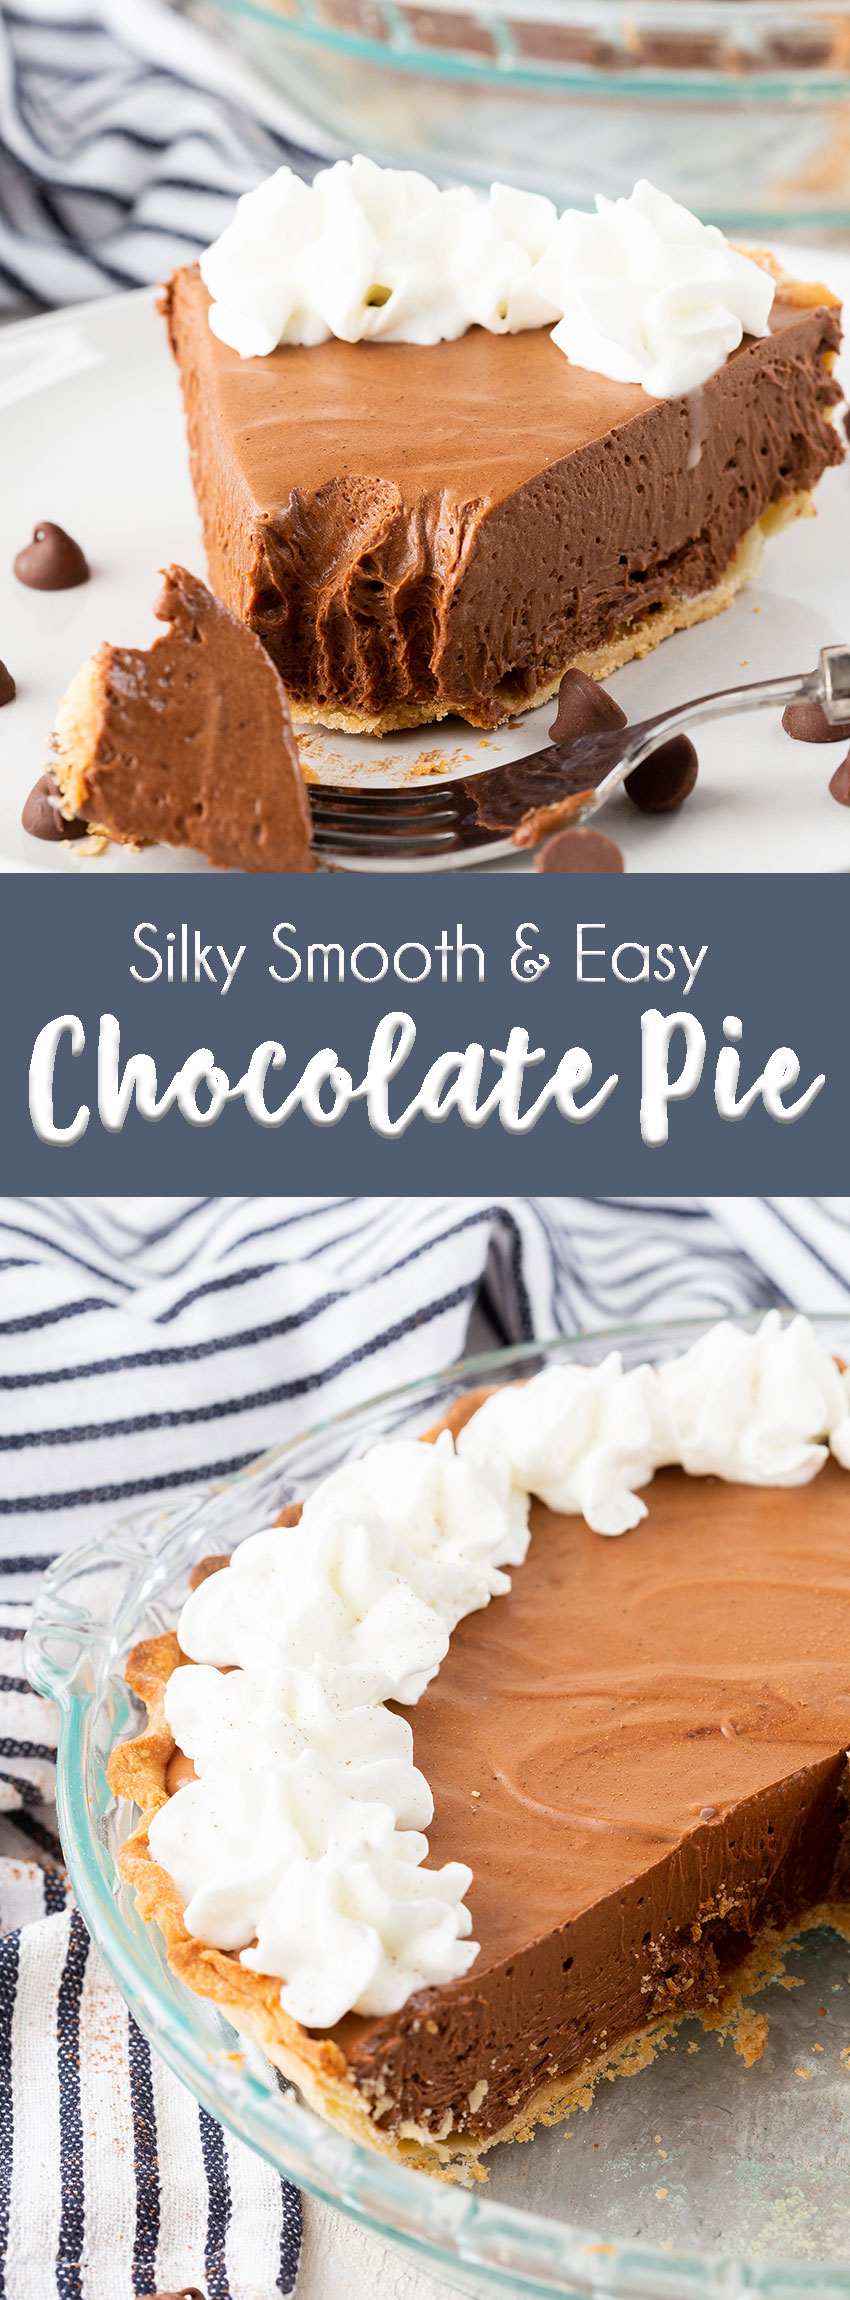 Chocolate Pie- a silky smooth and creamy chocolate pie